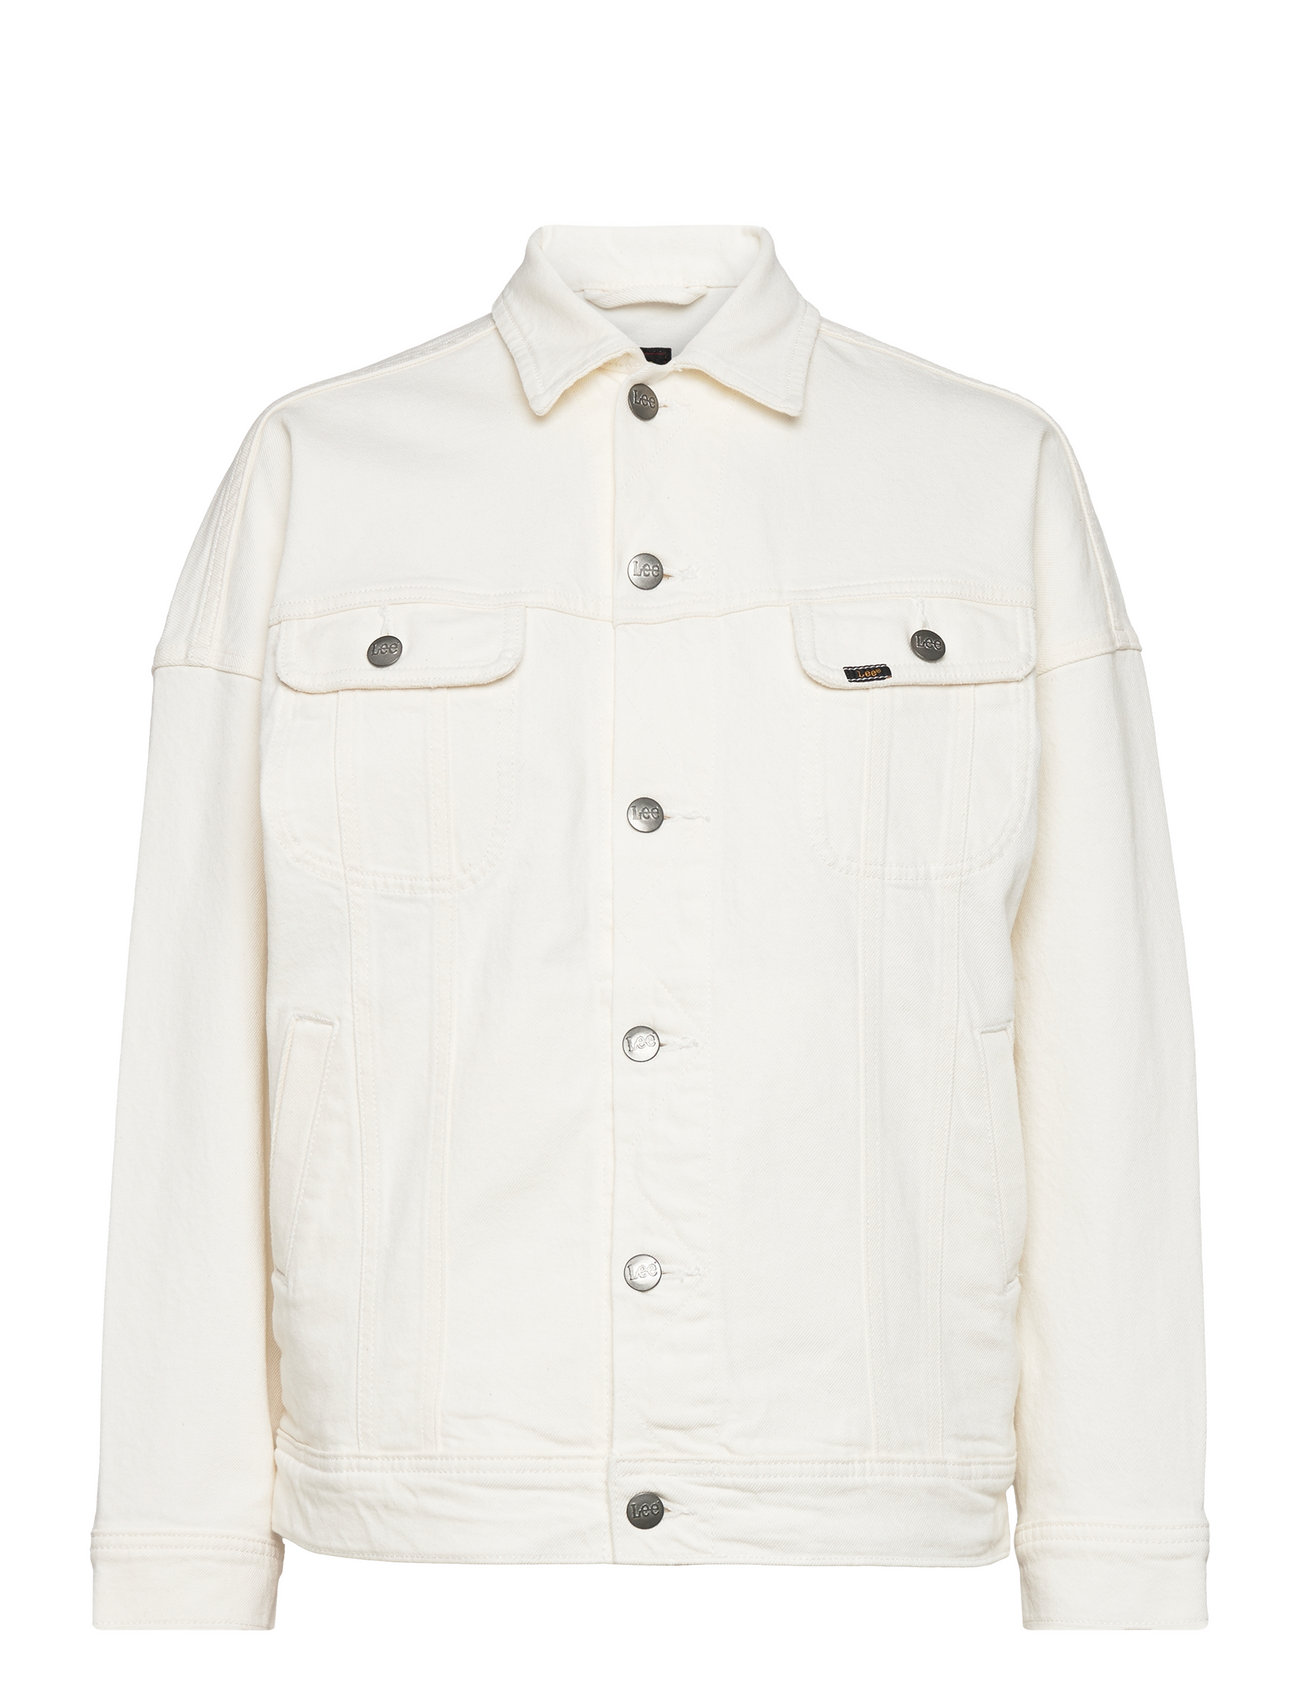 Lee RELAXED RIDER - Denim jacket - off white/off-white - Zalando.ie